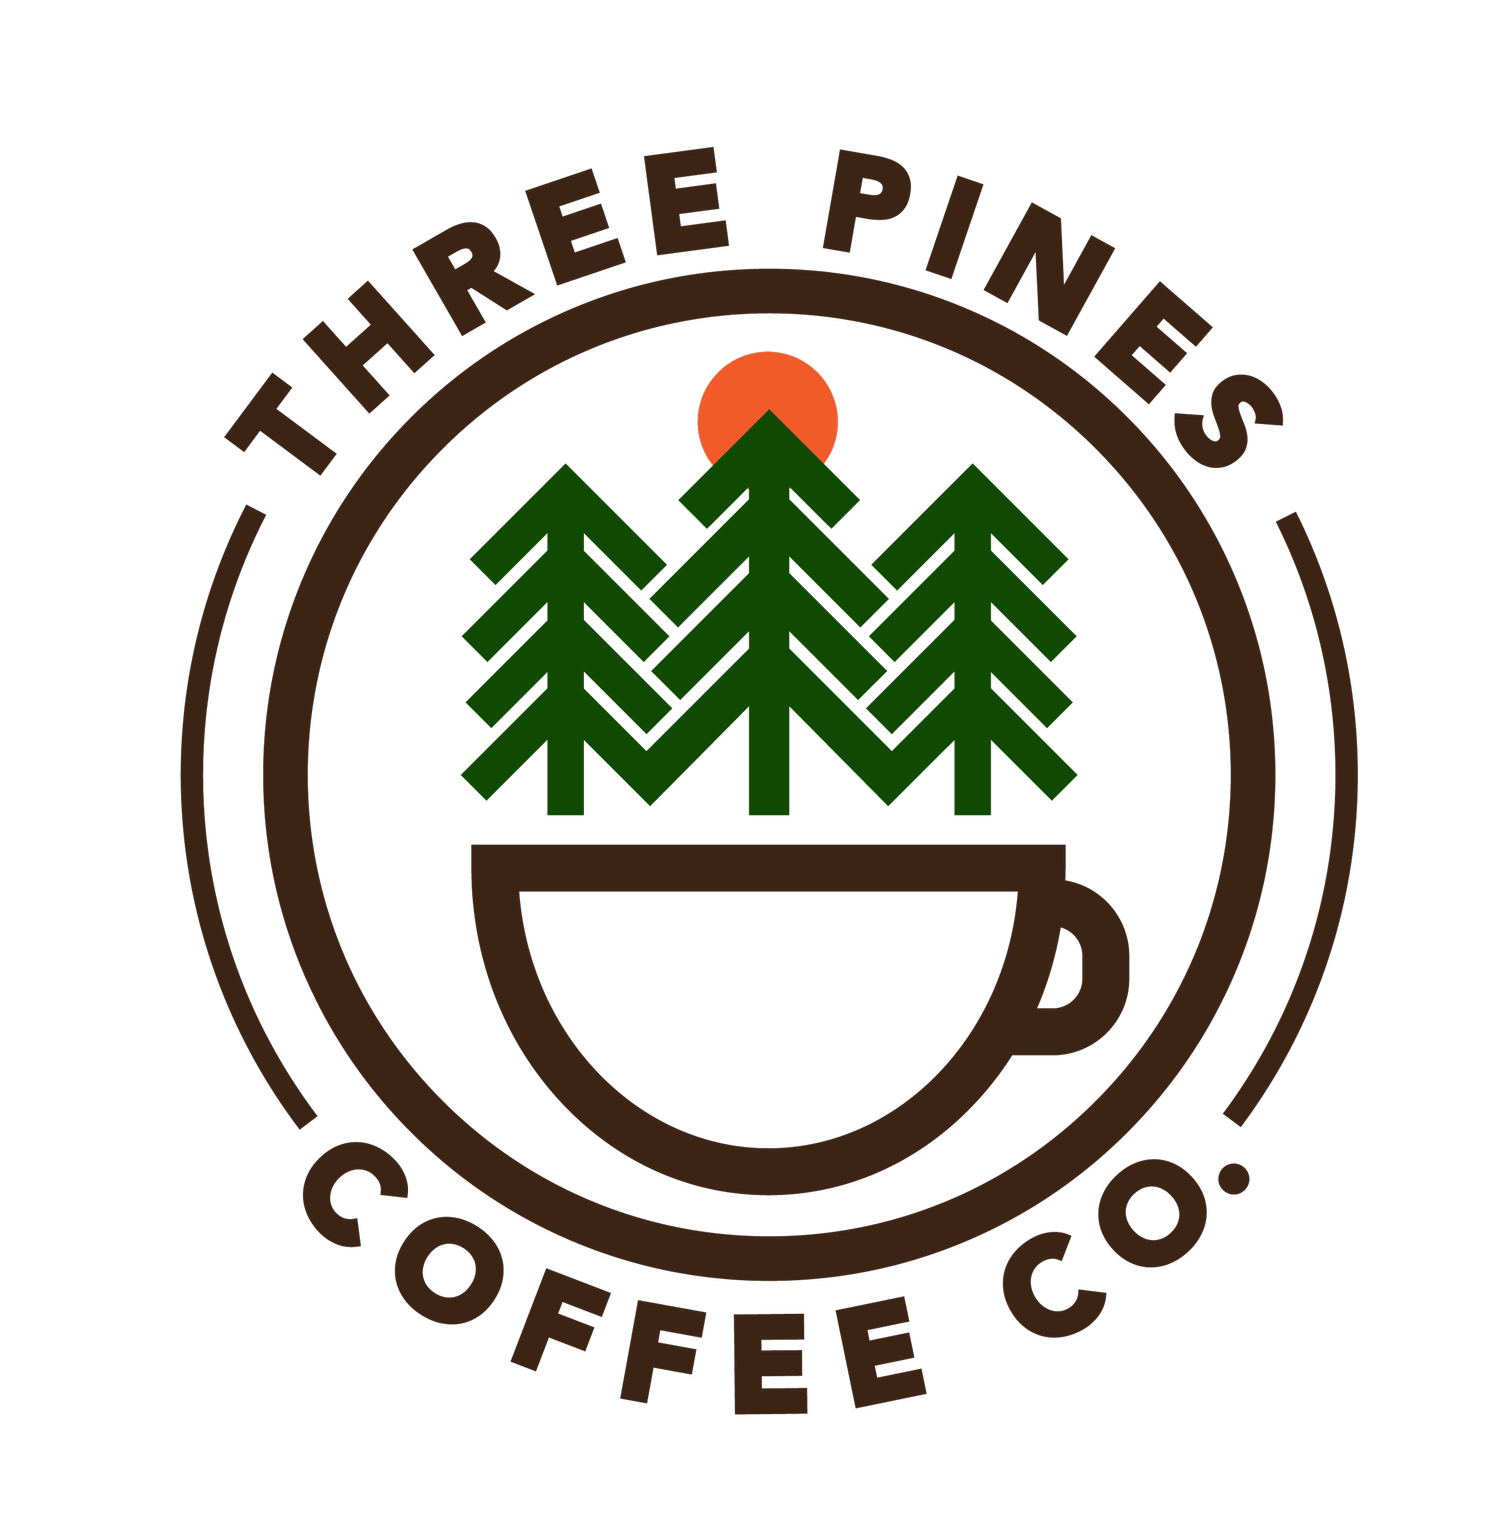 Three Pines Coffee Company | Life is too precious to drink average coffee